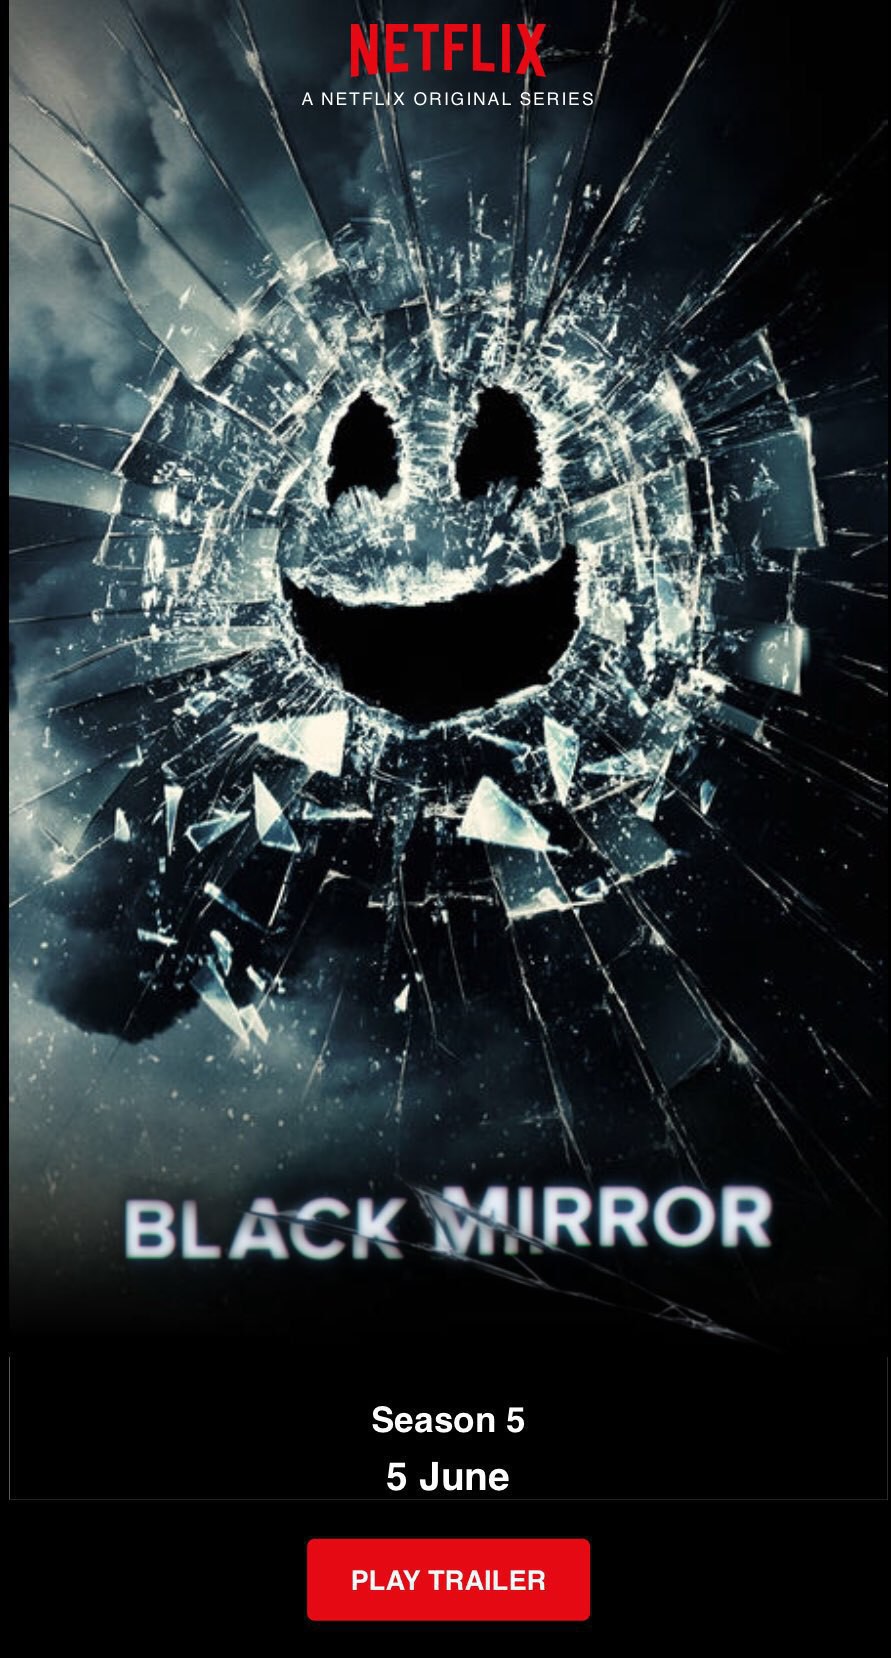 A promotional image for Black Mirrror season 5